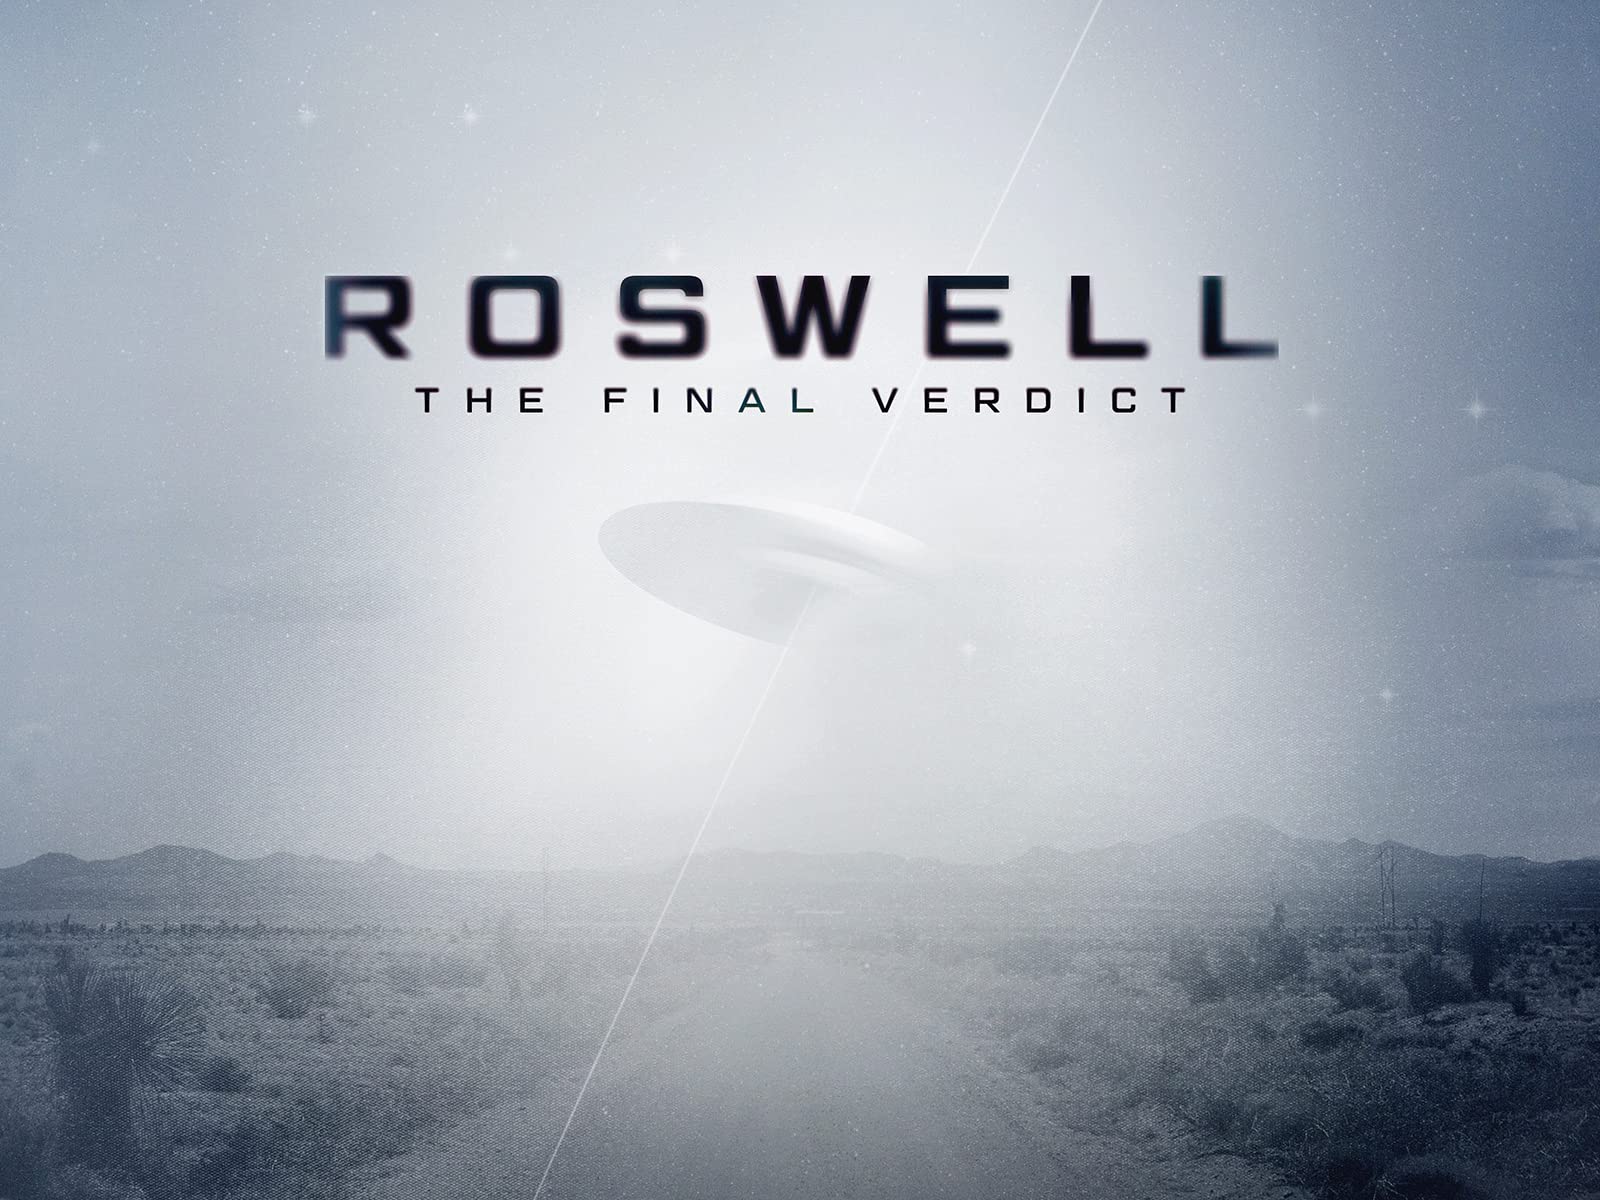 Roswell: The Final Verdict - Season 1